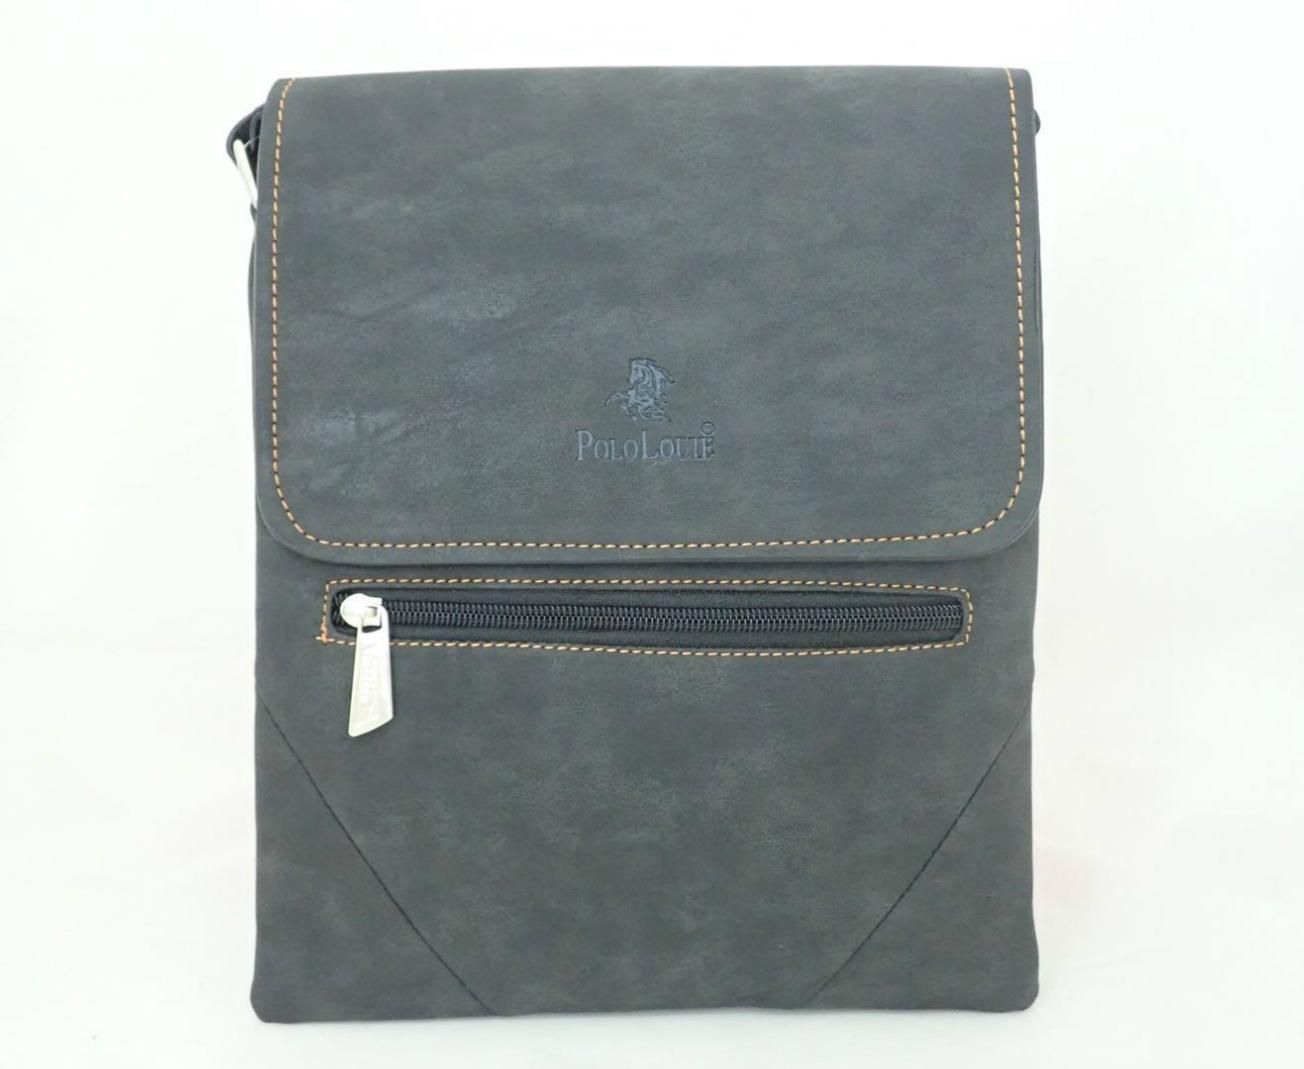 Polo Louie Men's Fashion Small Business Messenger Bag (Black - Khaki)